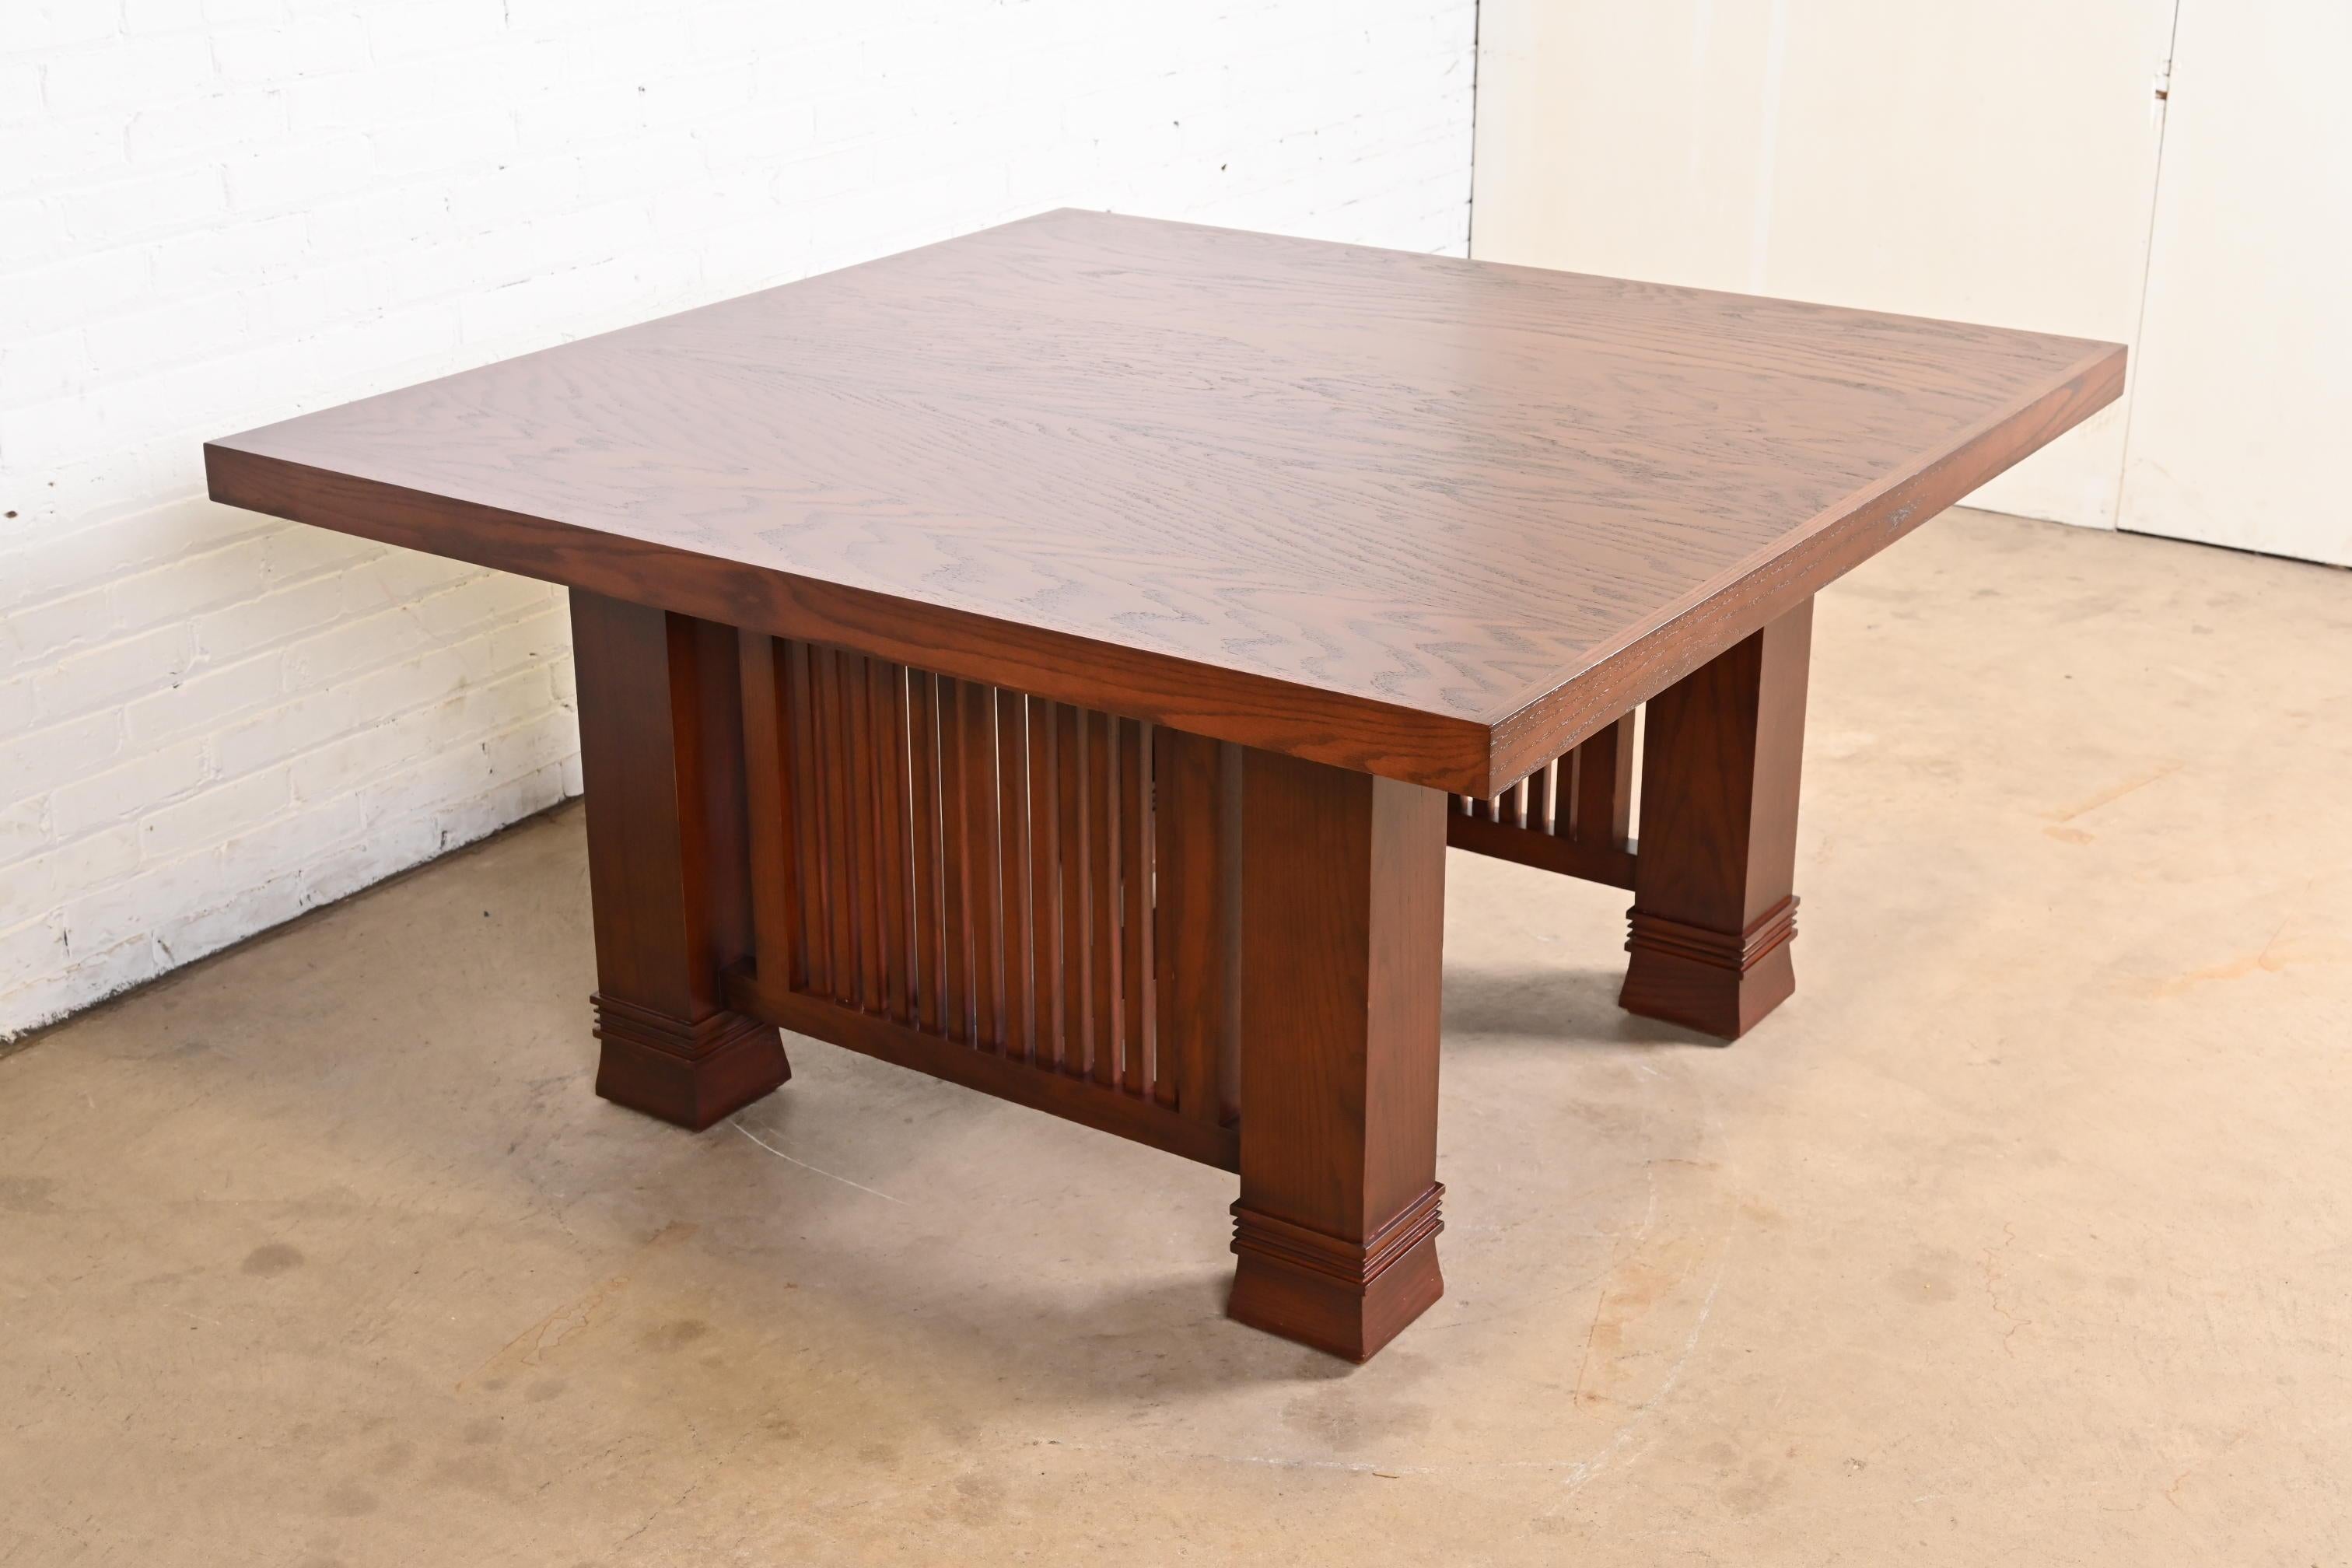 20th Century After Frank Lloyd Wright Dana Thomas House Arts & Crafts Oak Dining Table